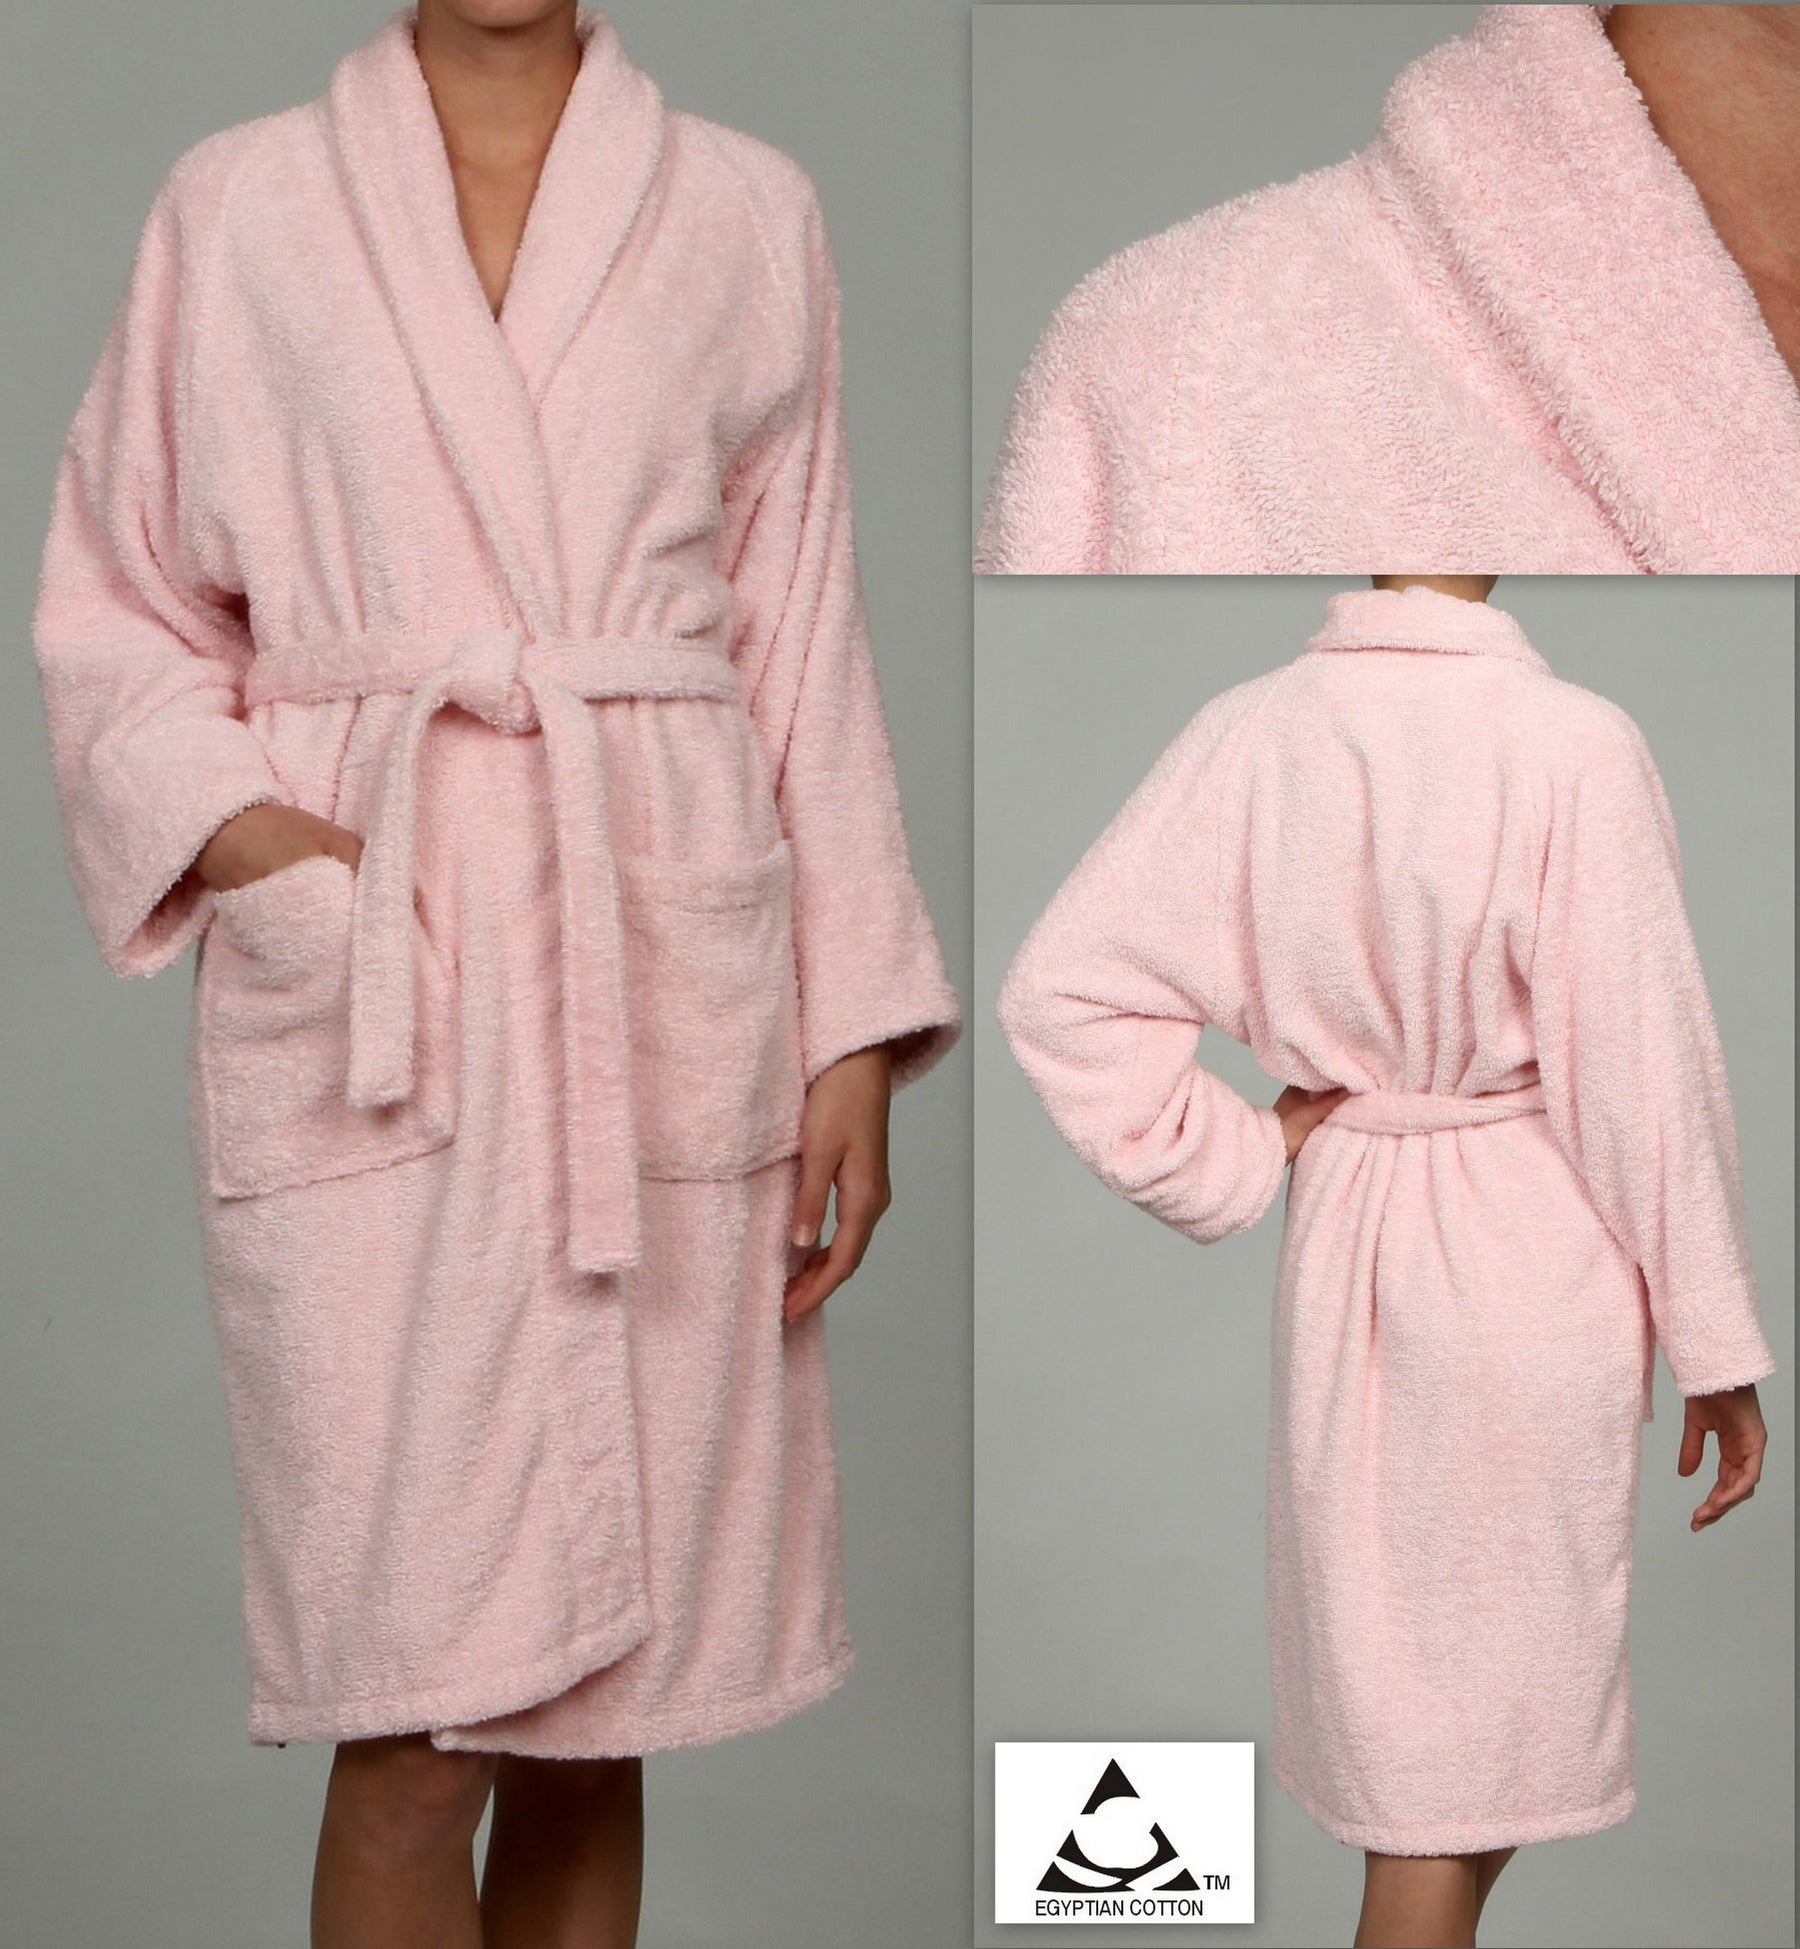 Cotton Ultra-Soft Terry Adult Unisex Lightweight Luxury Bathrobe - Pink